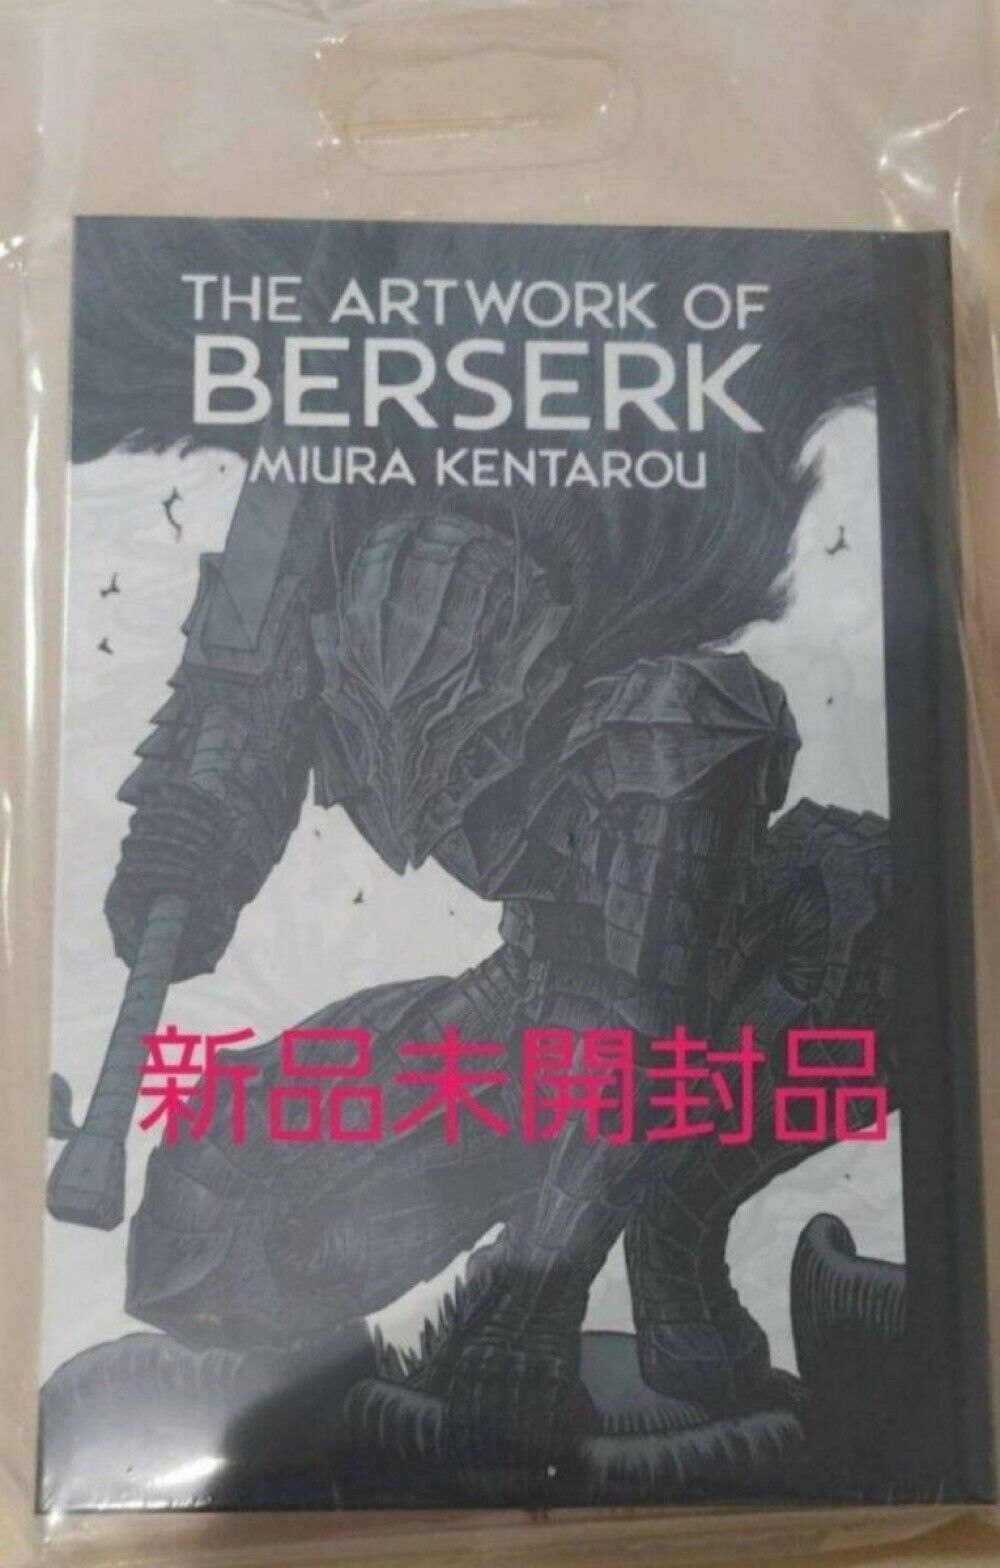 THE ARTWORK OF BERSERK Sealed Berserk Exhibition Official Illustration Art Book